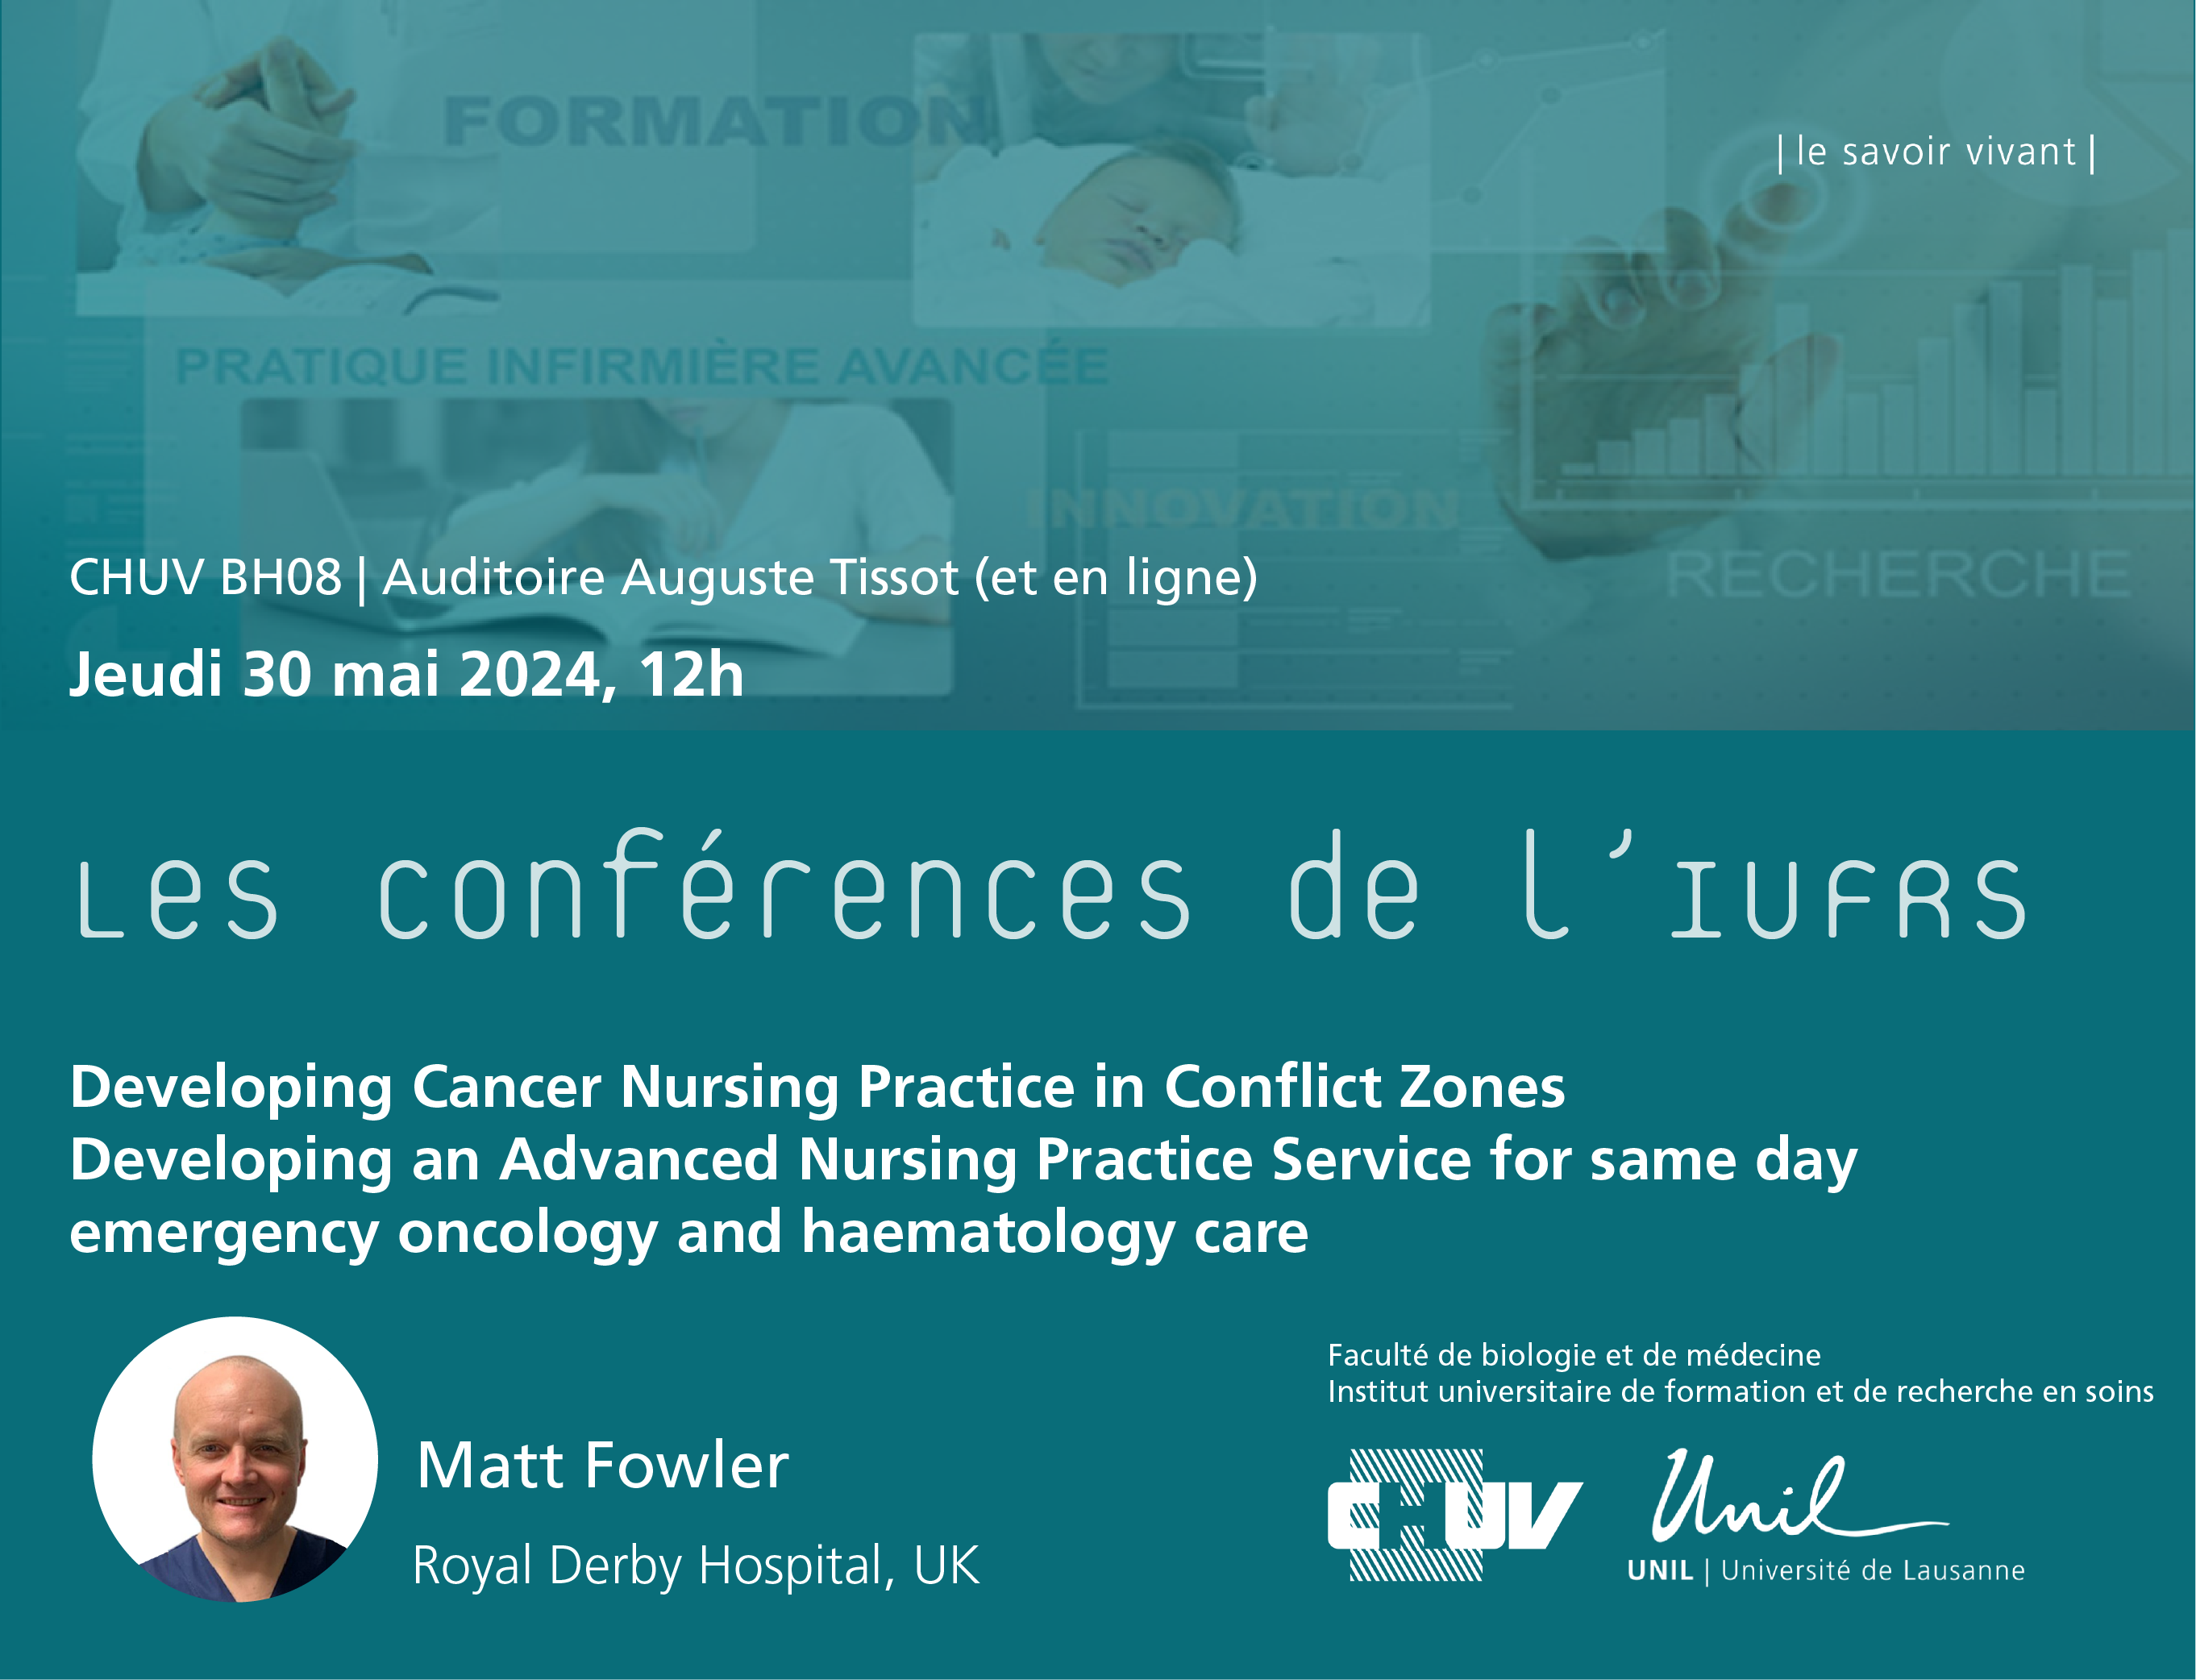 Conférence de l'IUFRS - Matt Fowler: Developping Cancer Nursing Practice in Conflict Zones